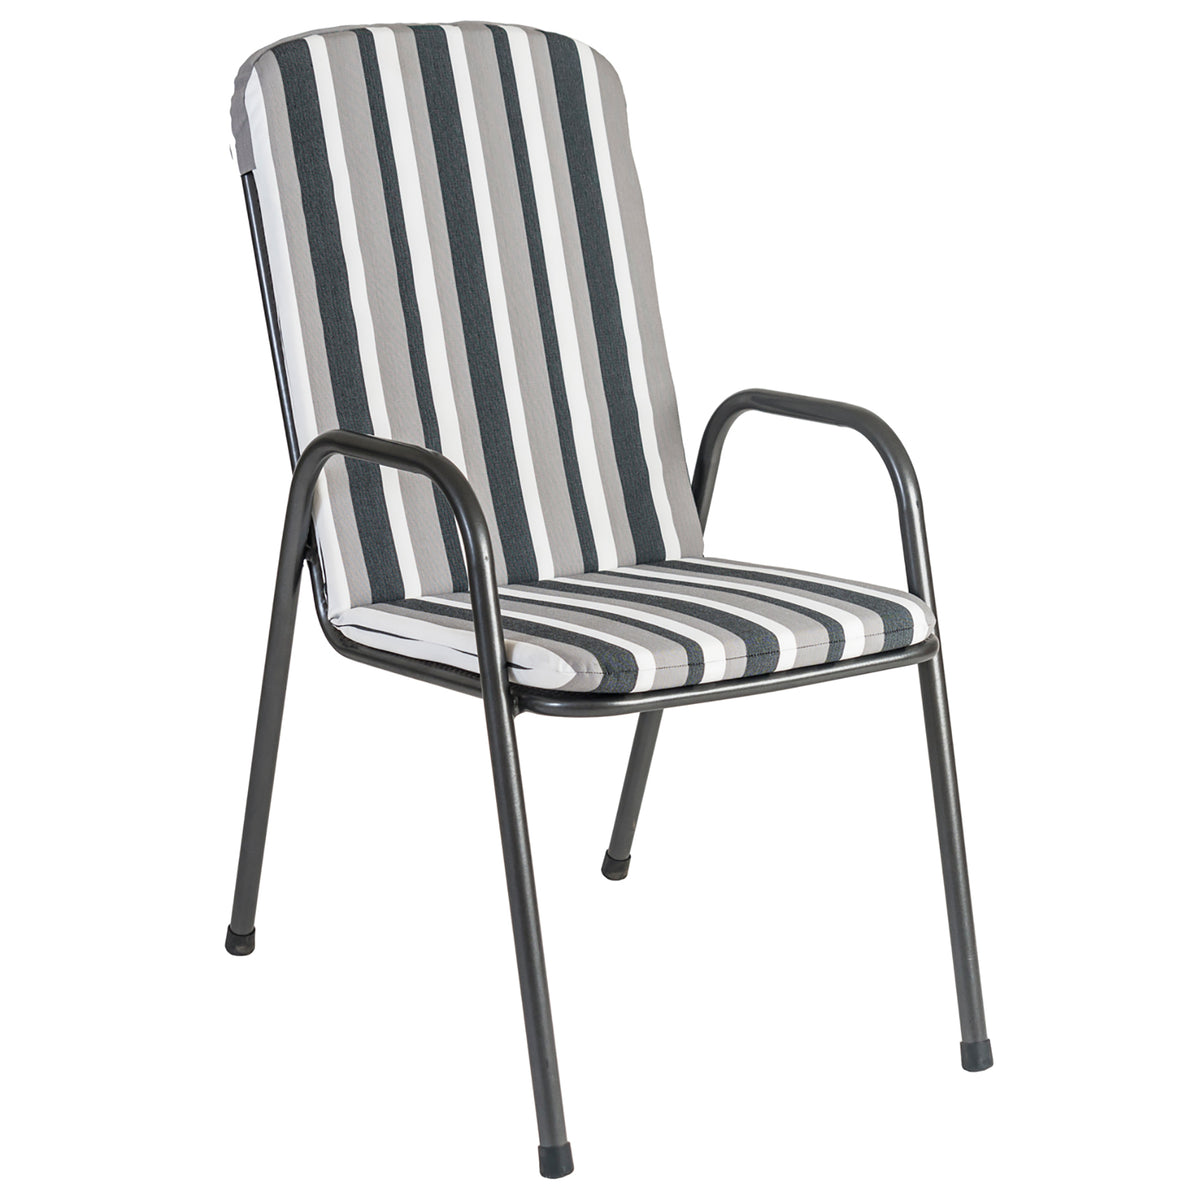 Alexander Rose Portofino Highback Chair Cushion (Charcoal Stripe)